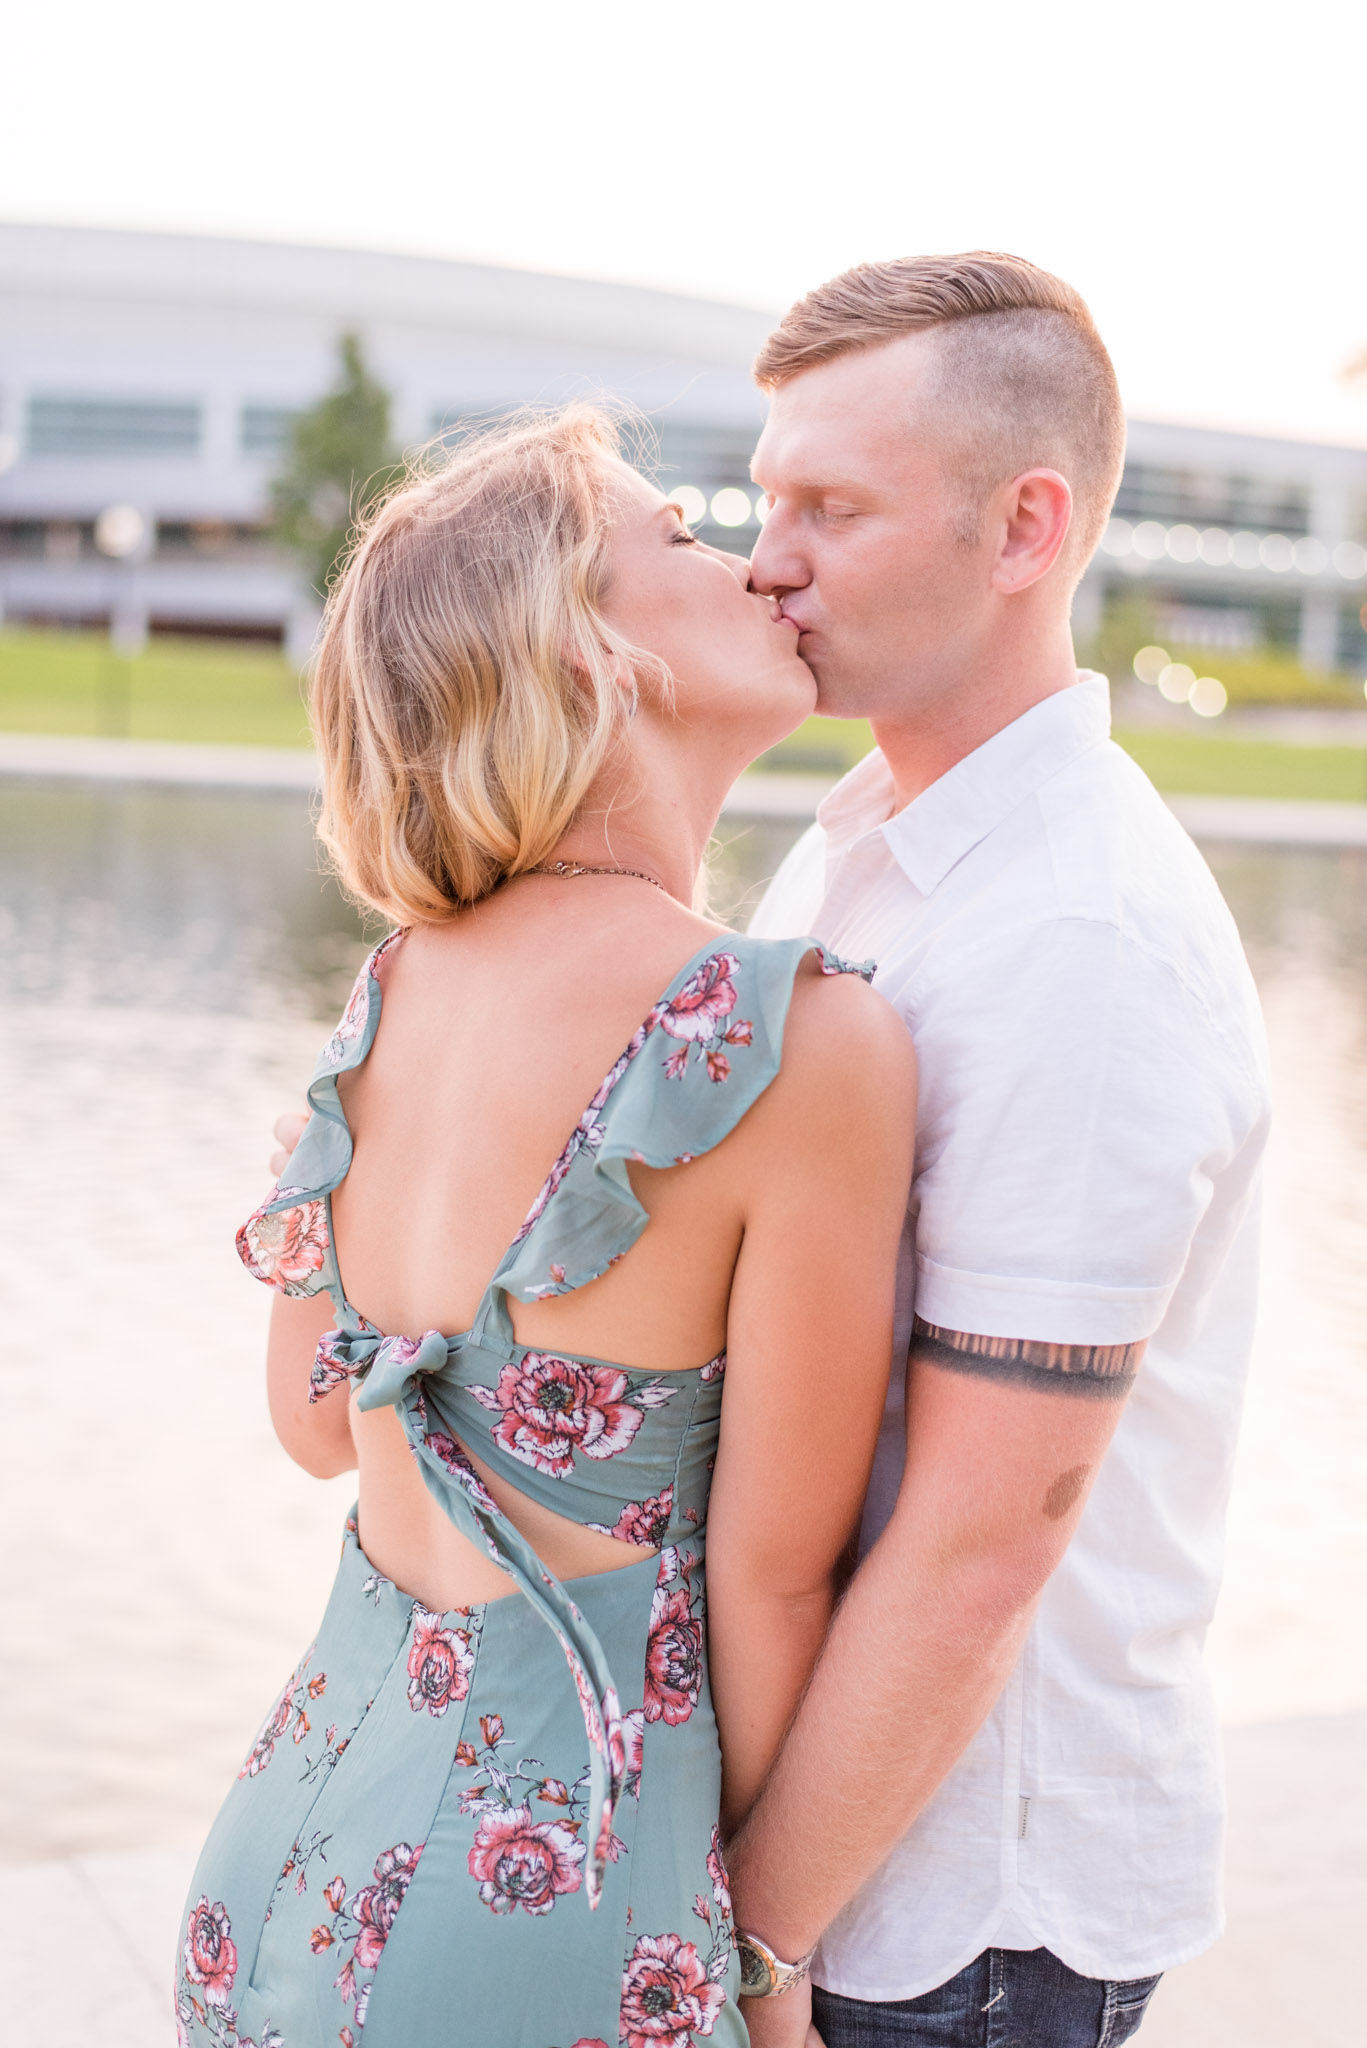 Huntsville couple kisses in front of lake in Alabama.